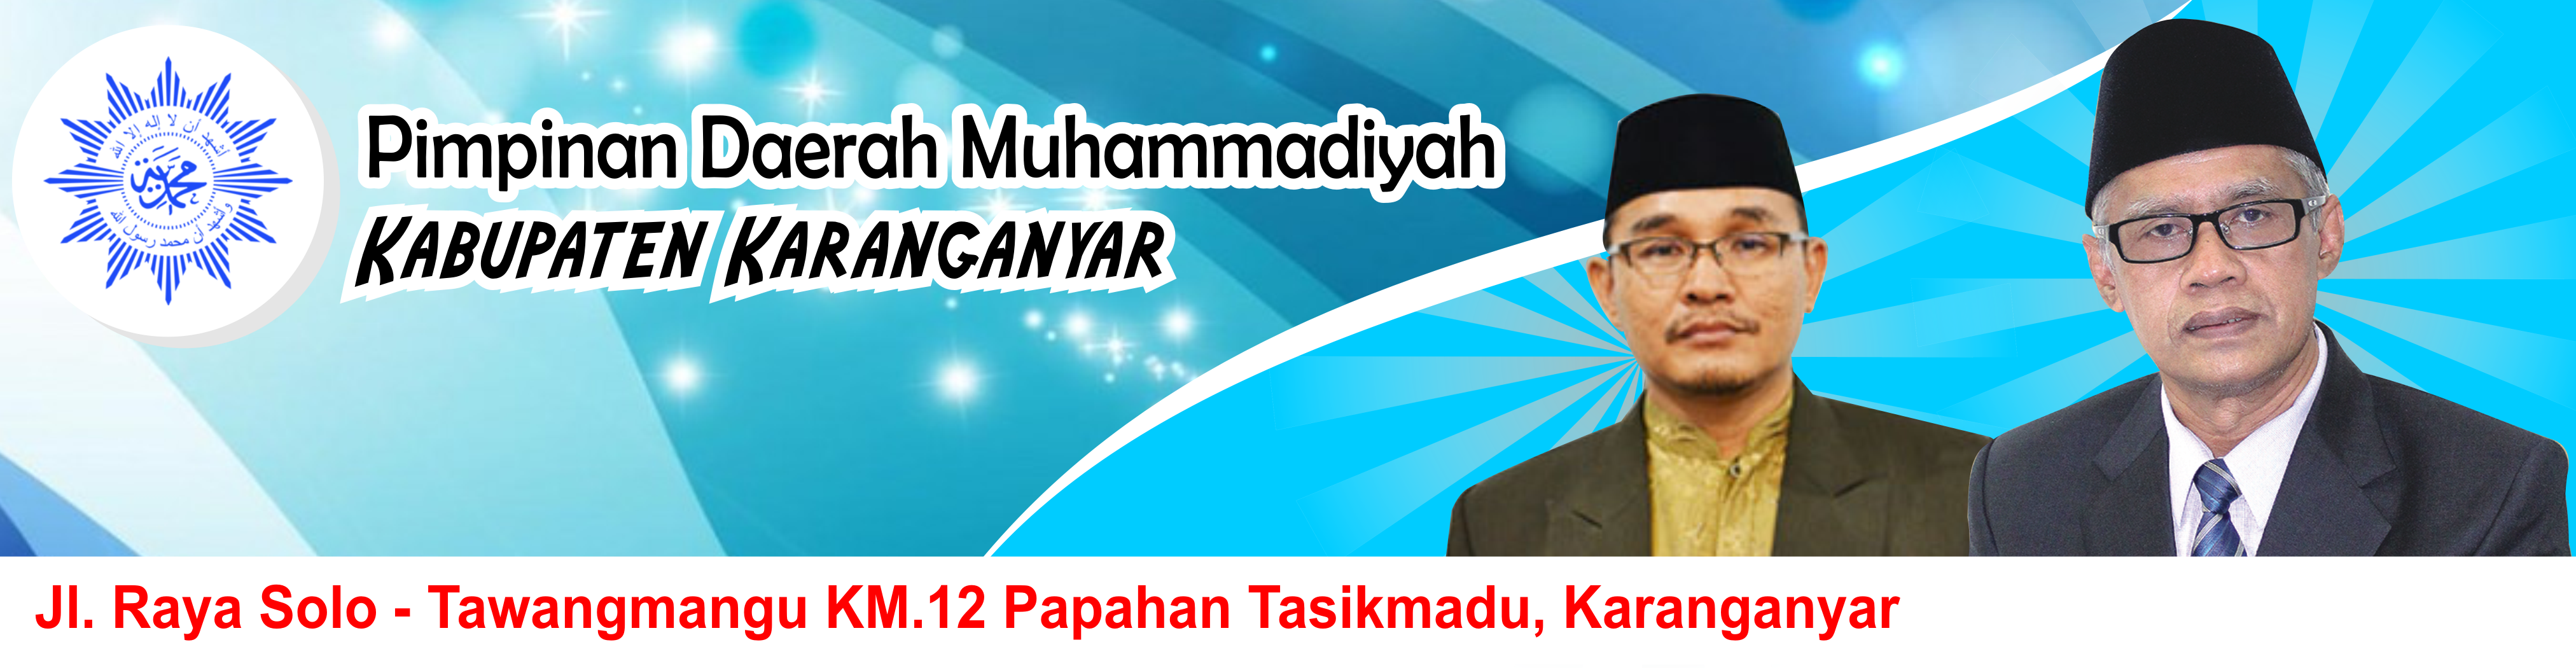 Majelis Tarjih dan Tajdid Pimpinan Daerah Muhammadiyah Kabupaten Karanganyar